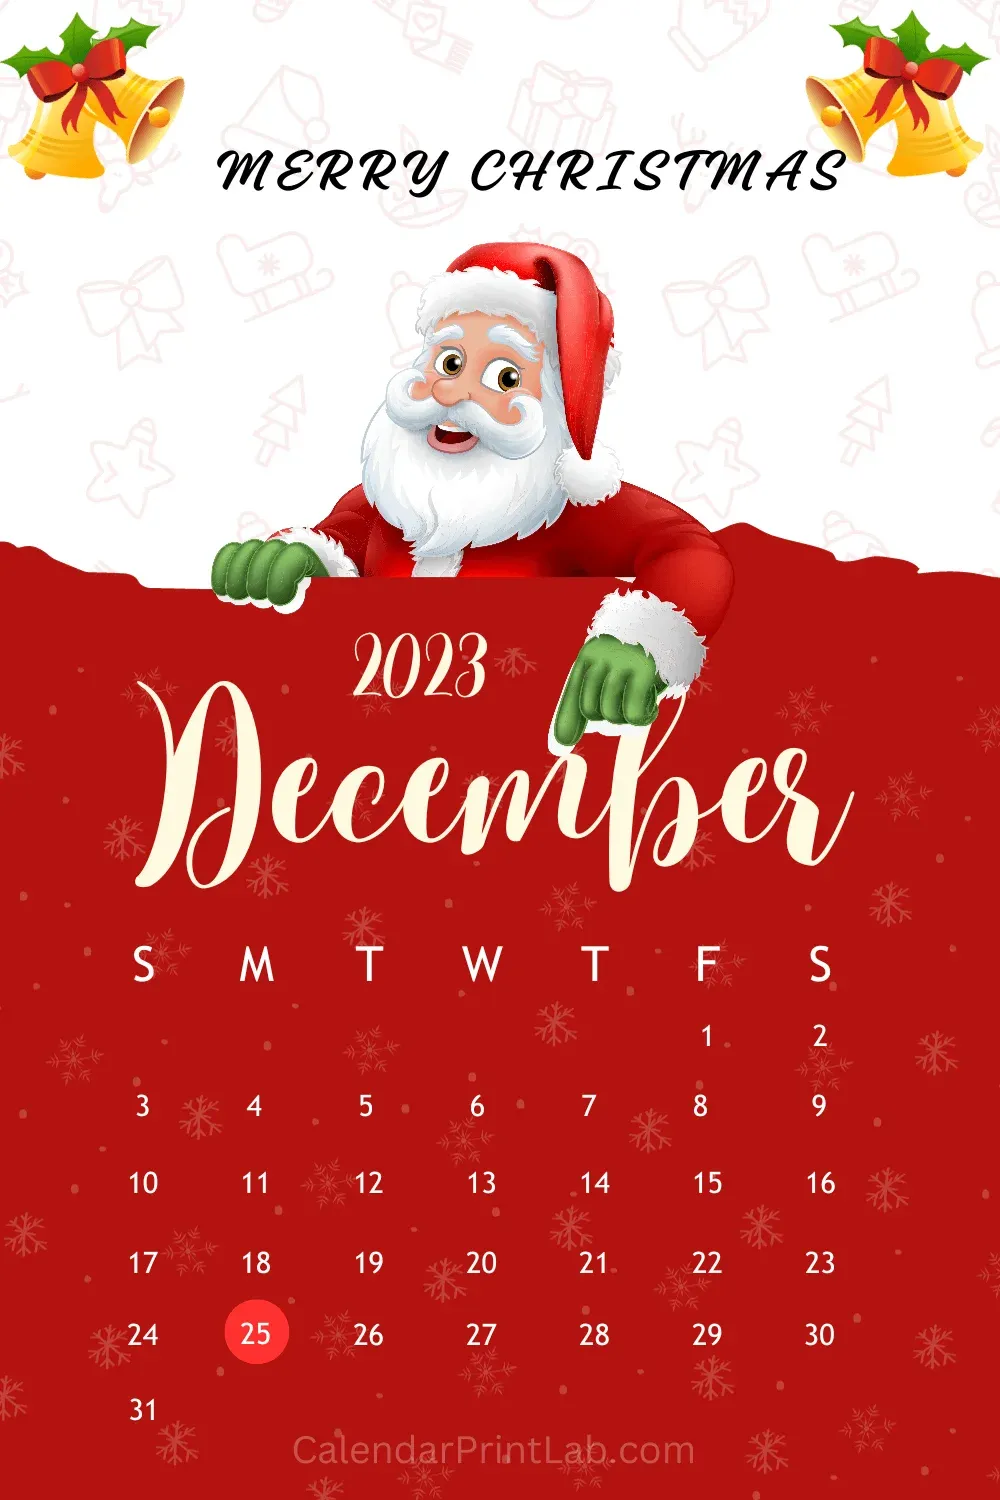 december 2023 christmas calendar with santa claus